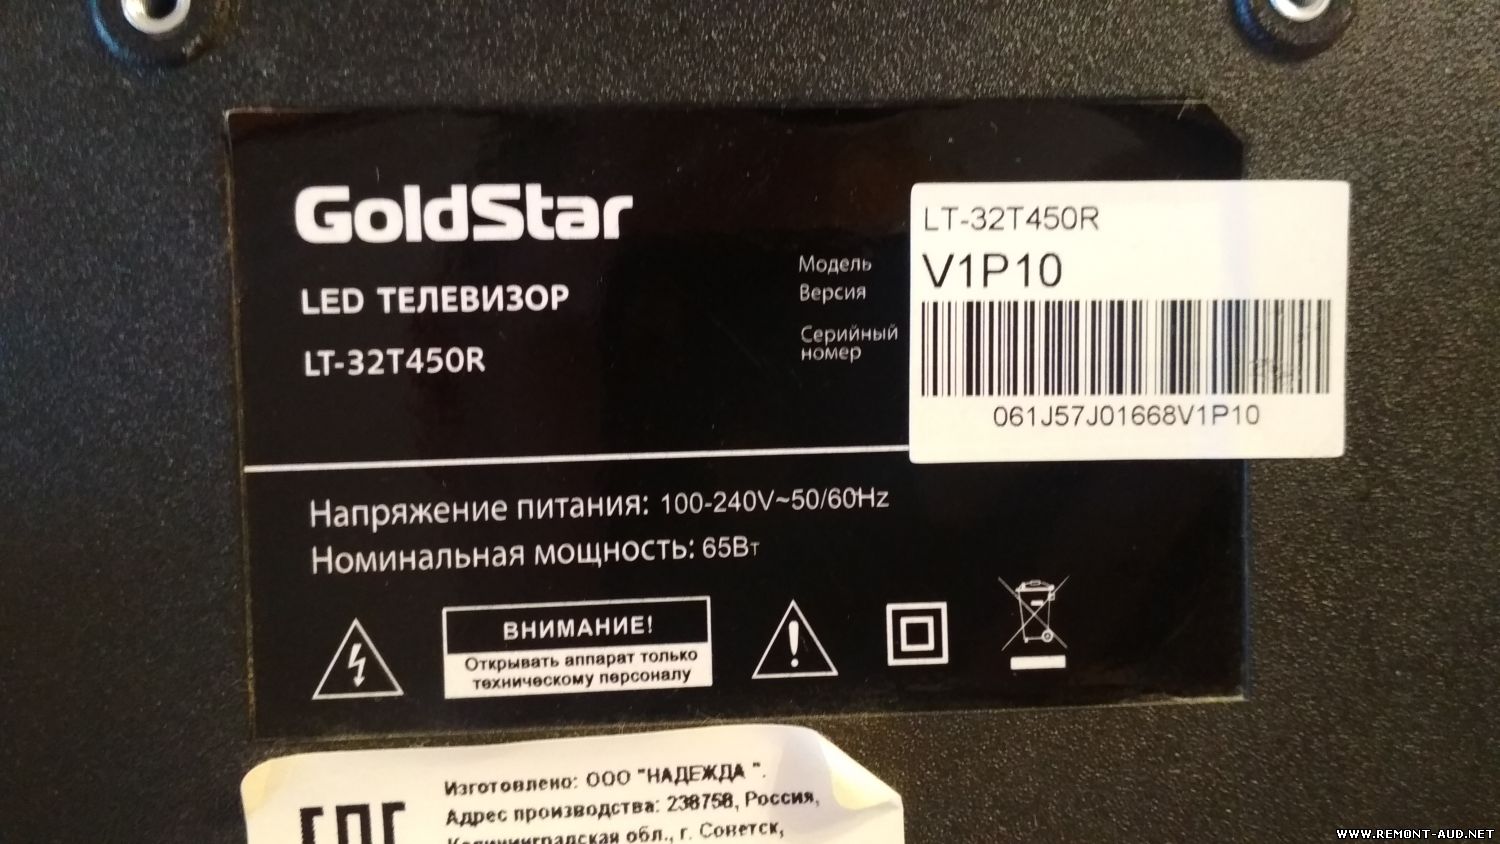 Goldstar lt 24r900. Телевизор Голдстар lt-55t440f. Блок питания к телевизору Голдстар. Плата телевизора Голдстар. Телевизор GOLDSTAR lt-32r900.